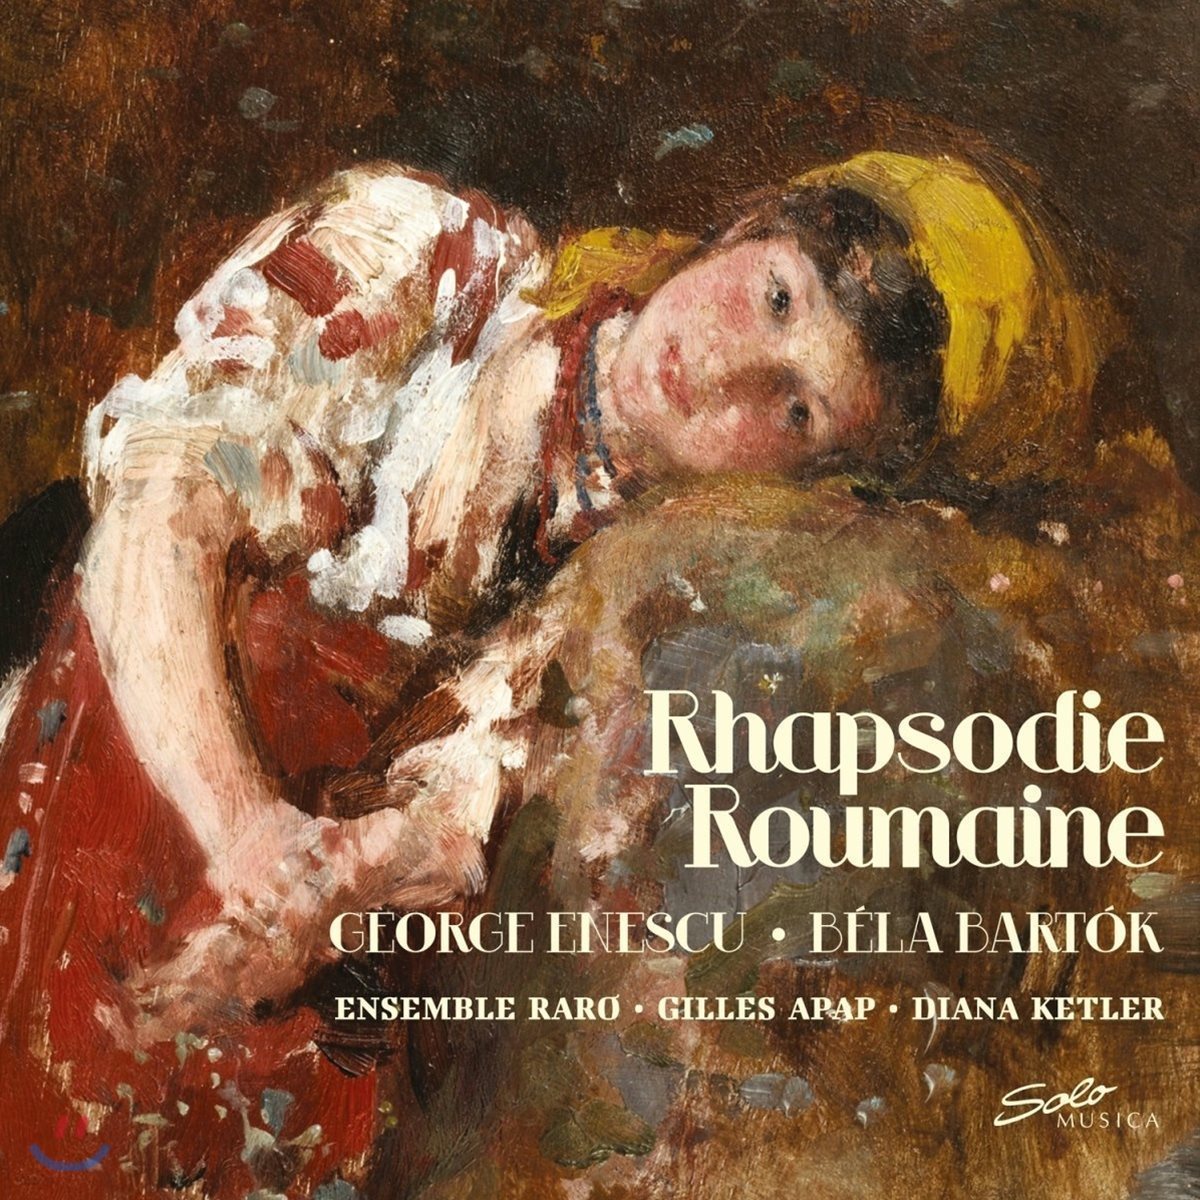 Ensemble Raro 루마니아 랩소디 - 에네스쿠 / 바르톡 (Rhapsodie Roumaine: Enescu / Bartok)